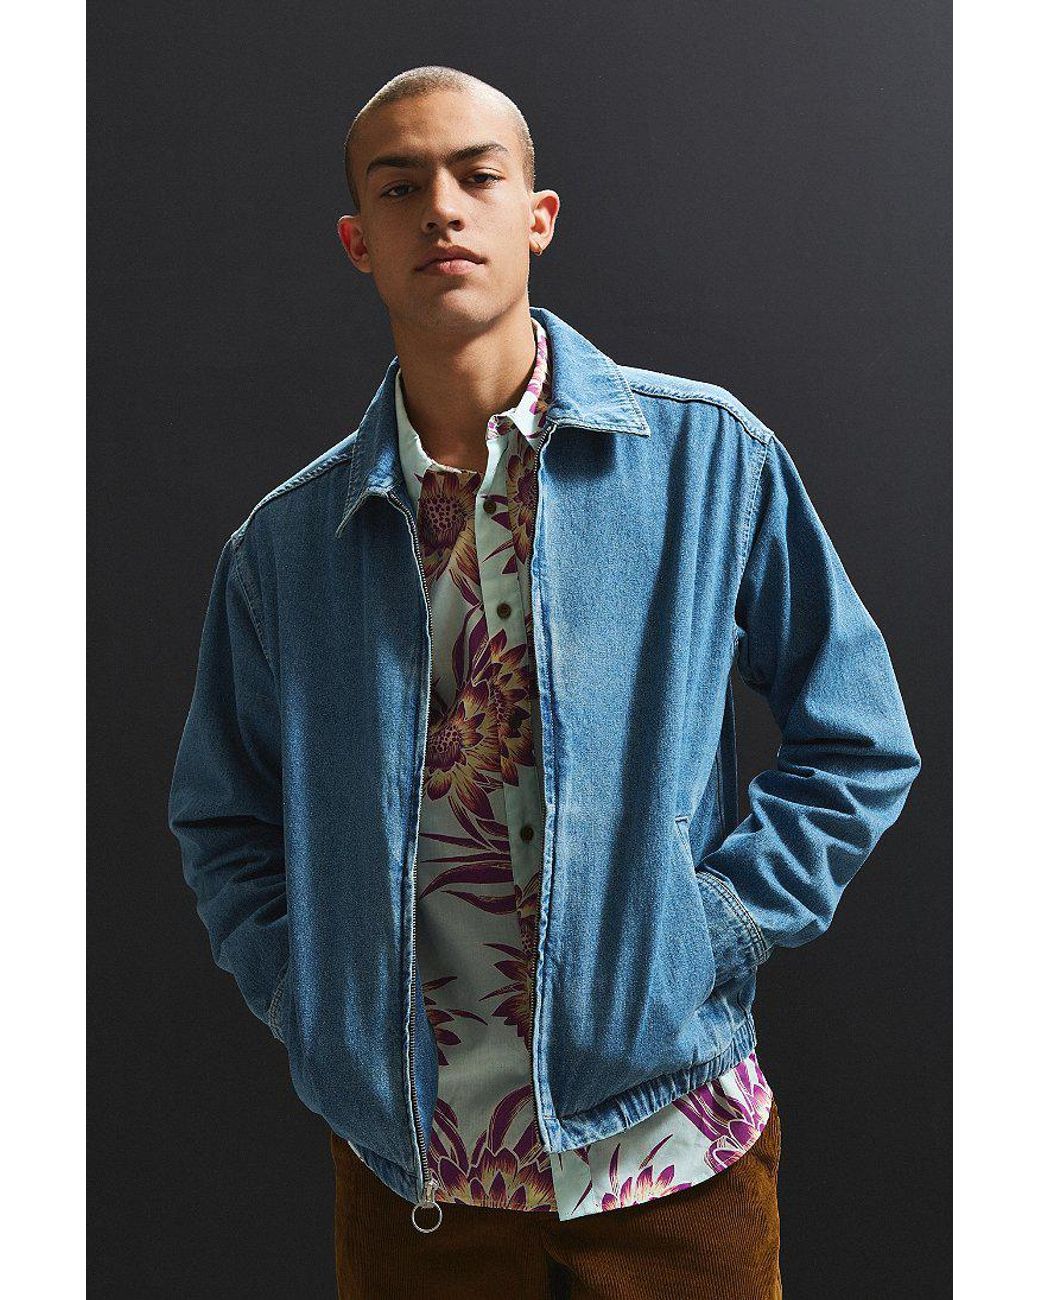 Urban Outfitters Uo Denim Harrington Jacket in Blue for Men | Lyst